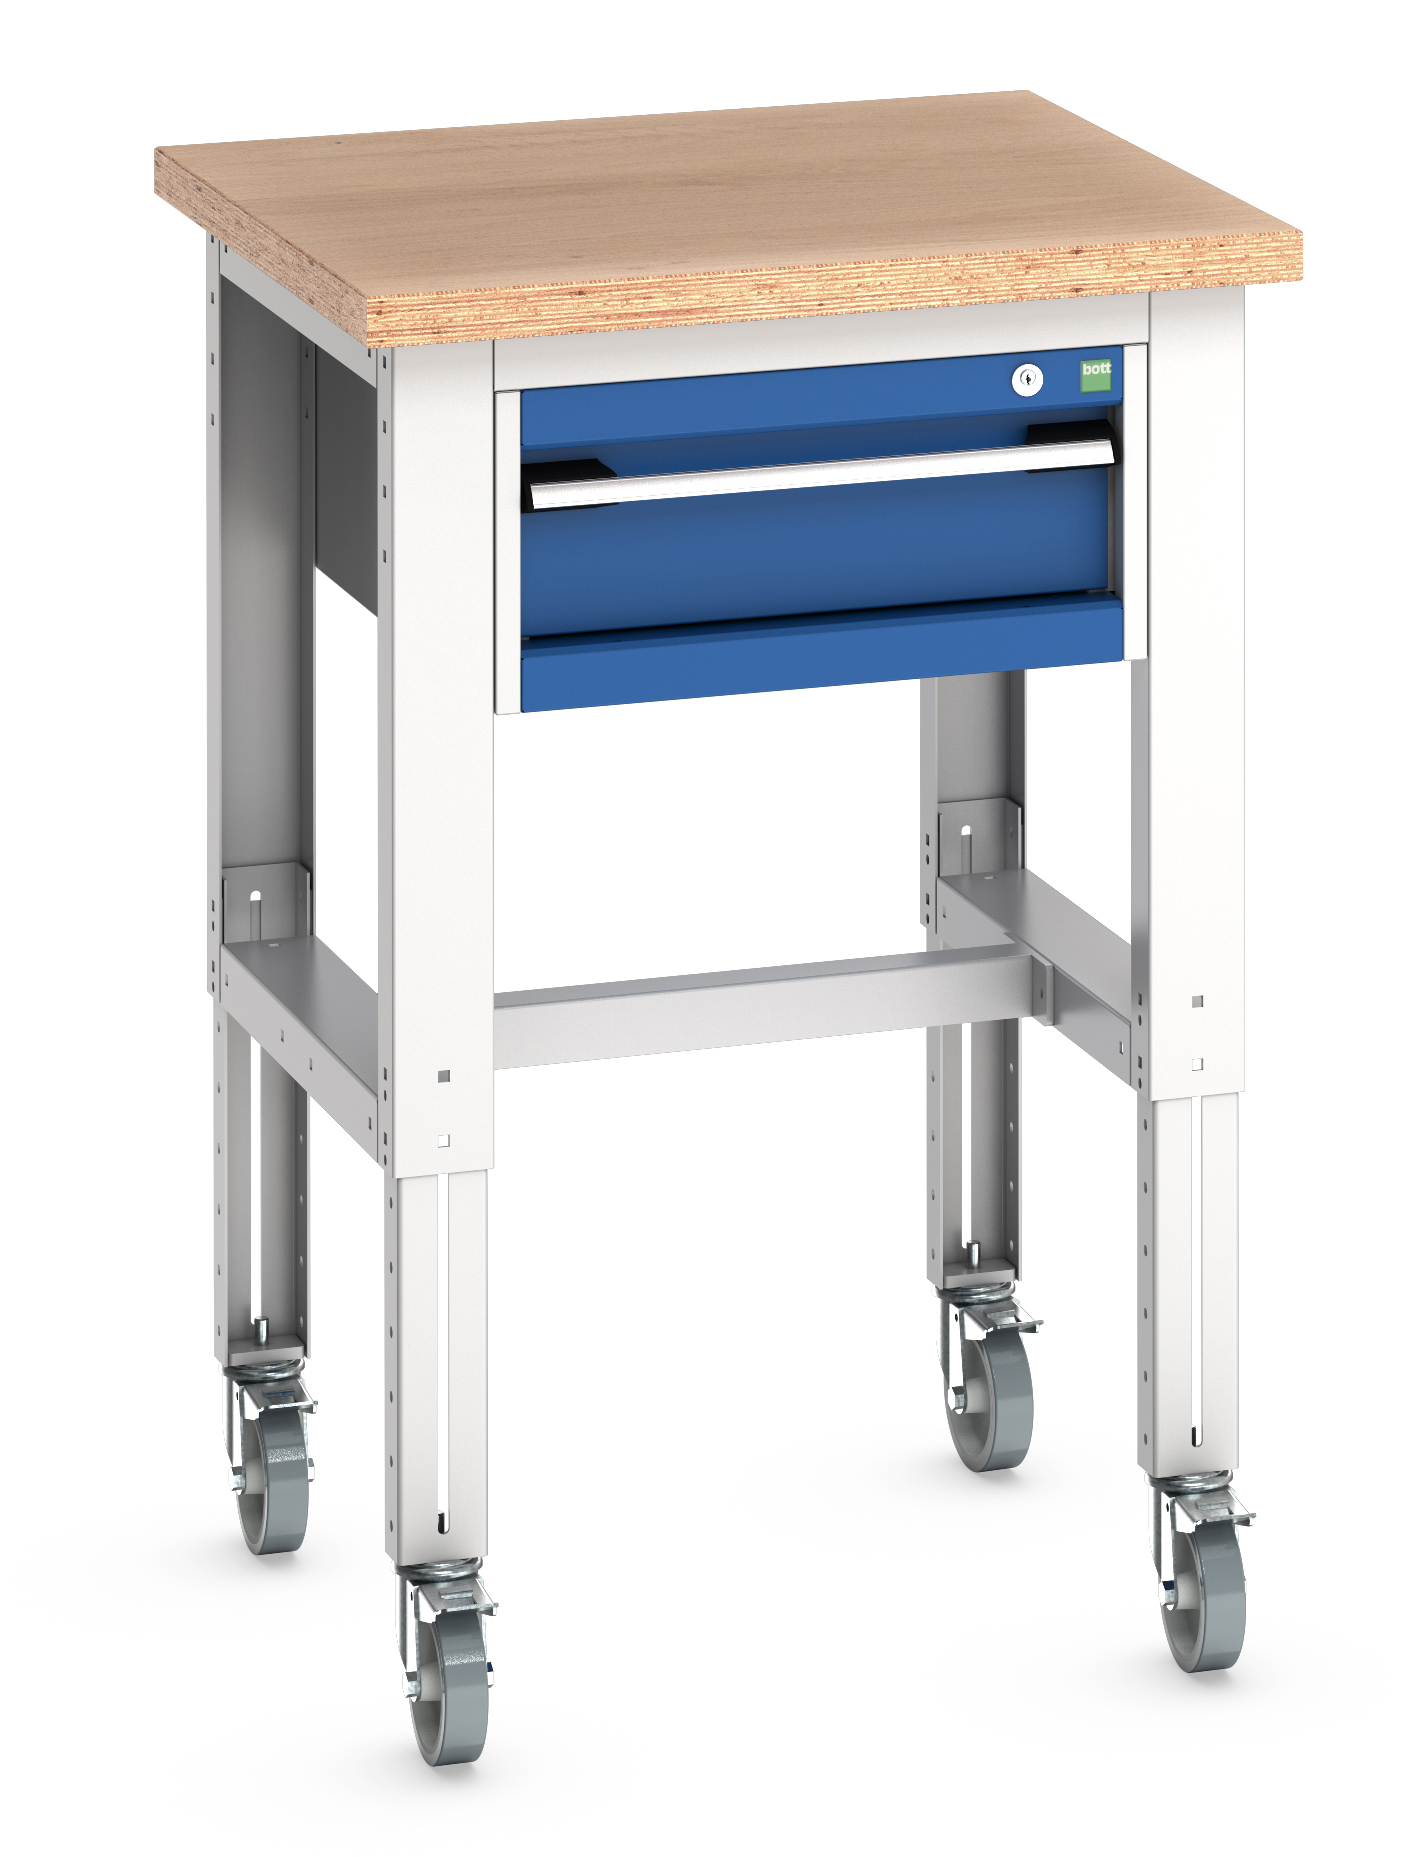 Bott Cubio Adjustable Height Mobile Workstand With 1 Drawer Cabinet - 41003271.11V